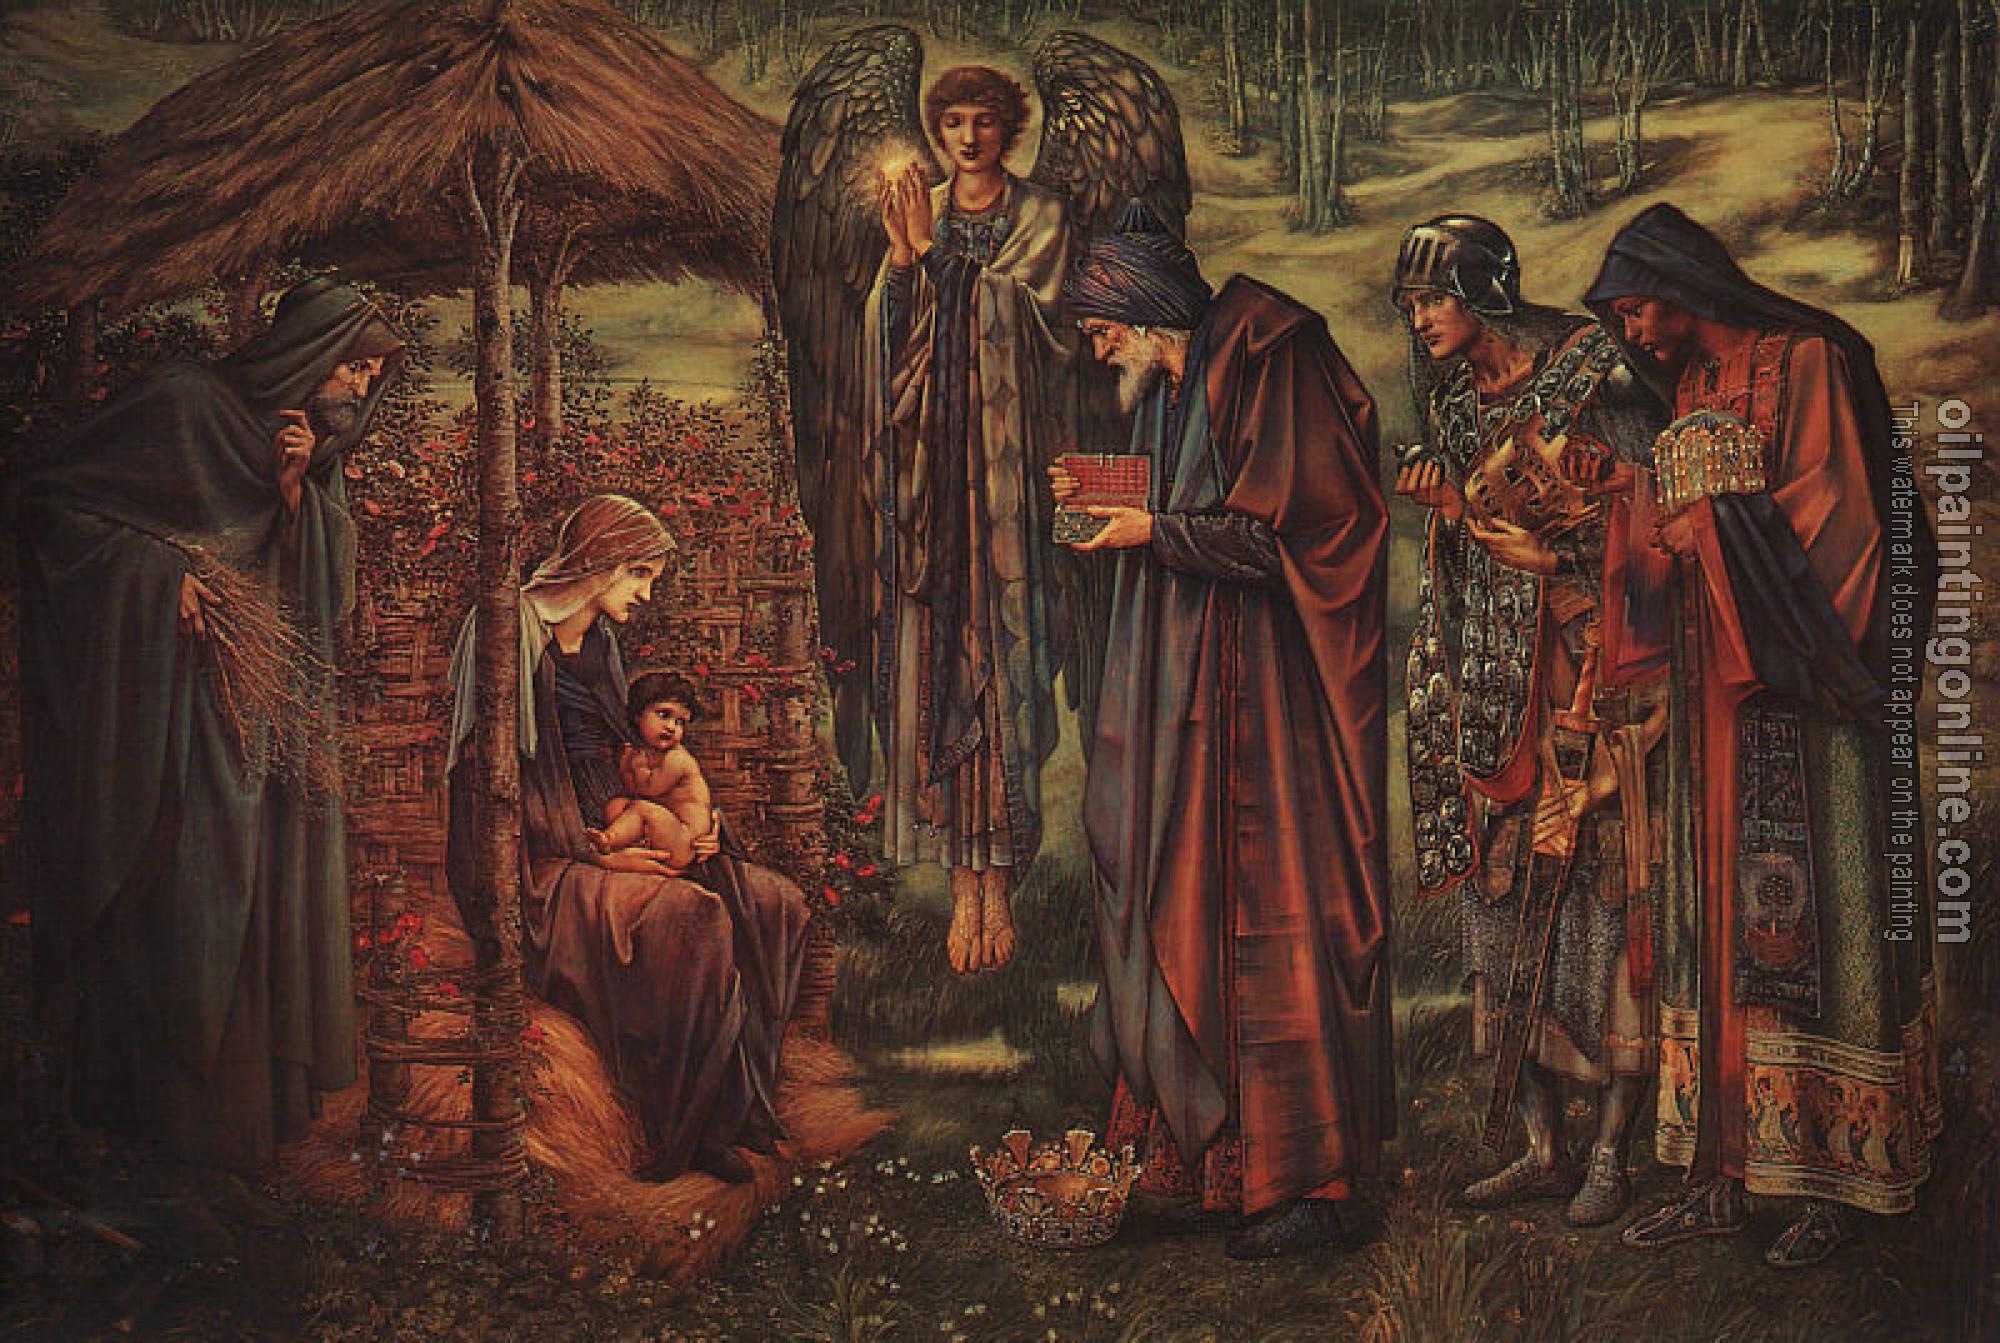 Burne-Jones, Sir Edward Coley - The Star of Bethlehem